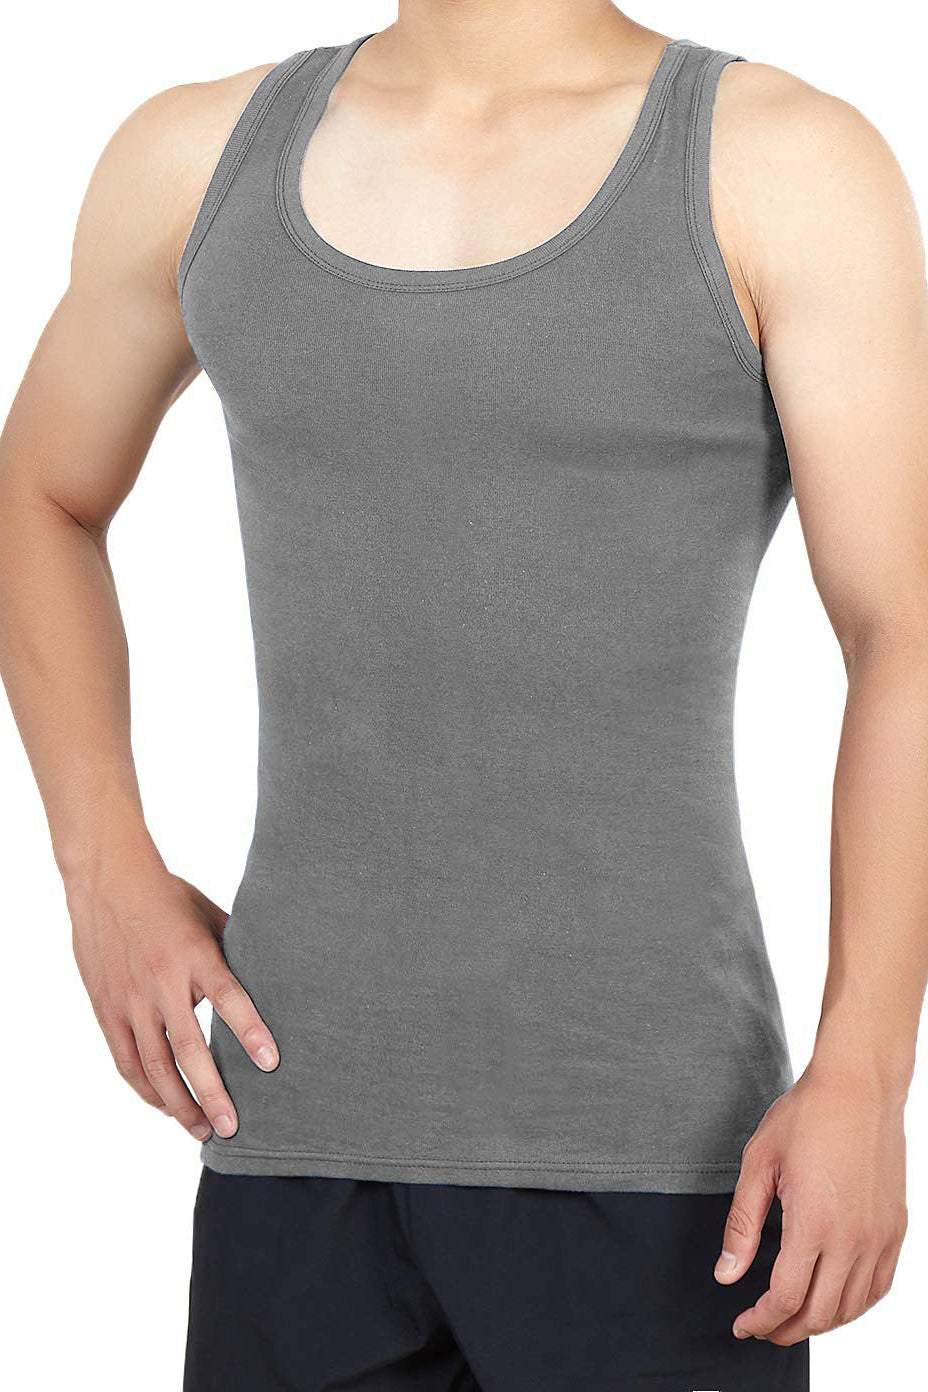 Men's Undershirts Vest 4 pieces SETS, Soft and Breathable underwear (grey)